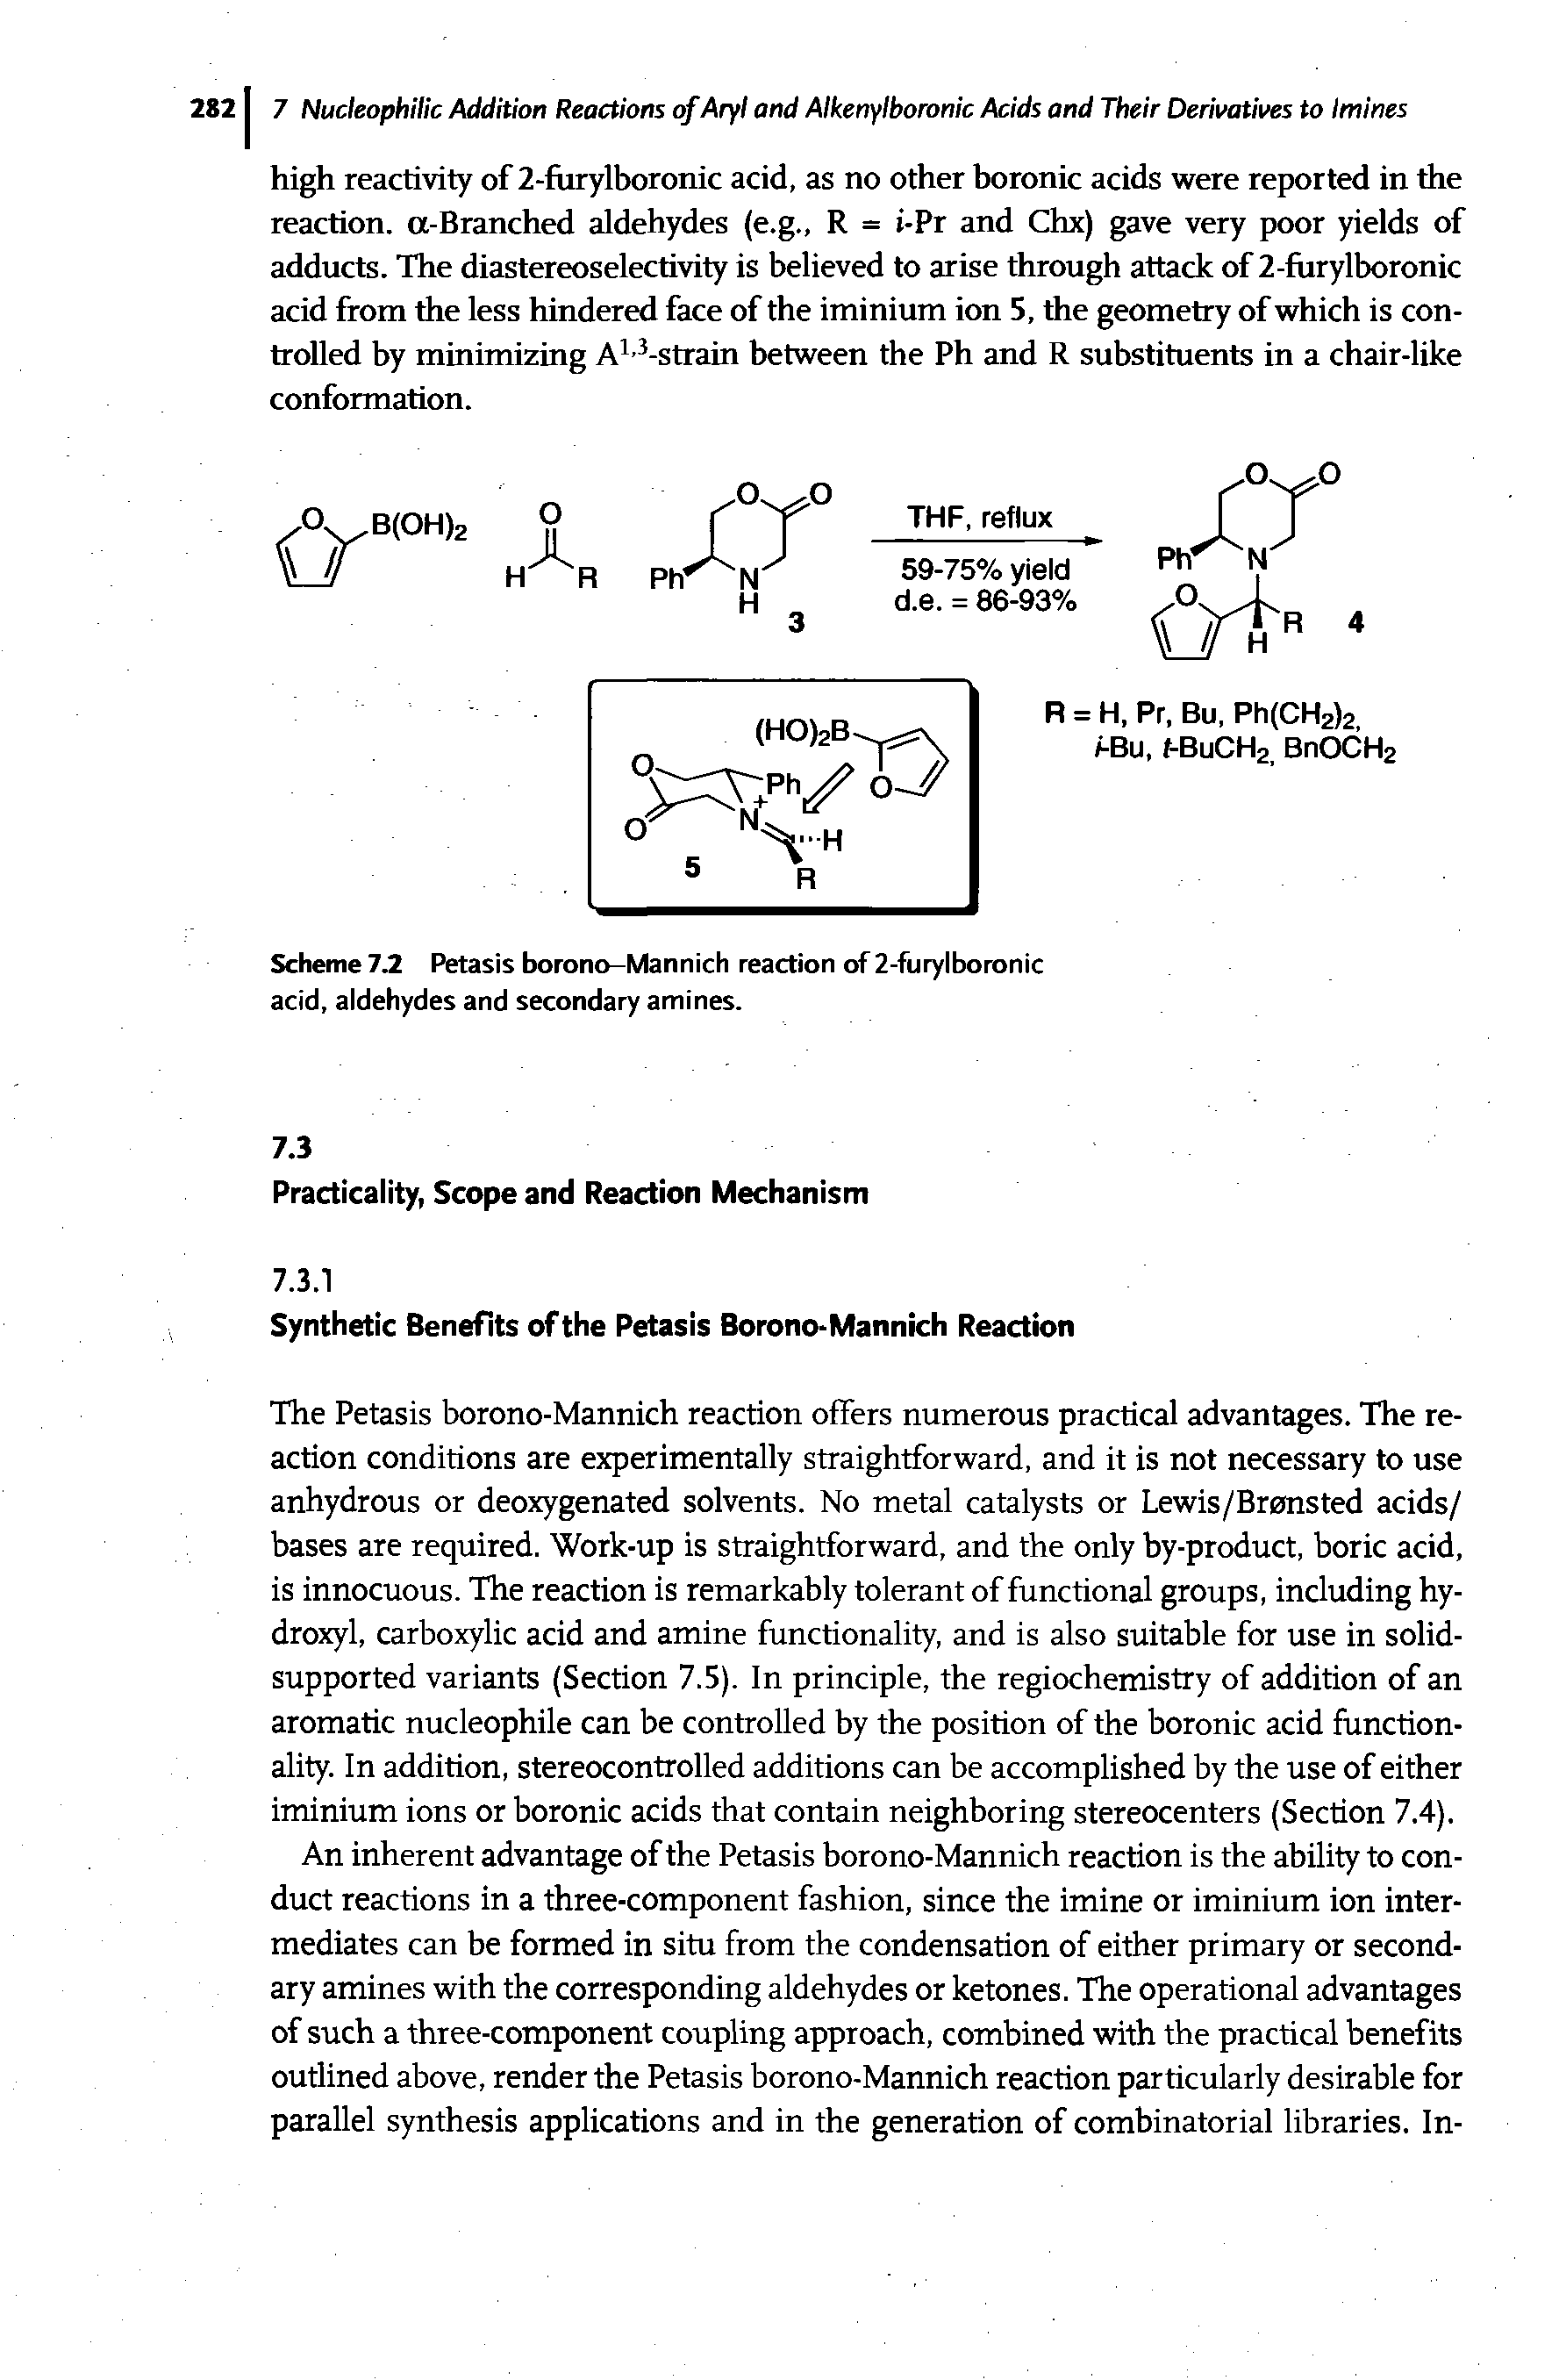 Scheme 7.2 Petasis borono-Mannich reaction of 2-furylboronic acid, aldehydes and secondary amines.